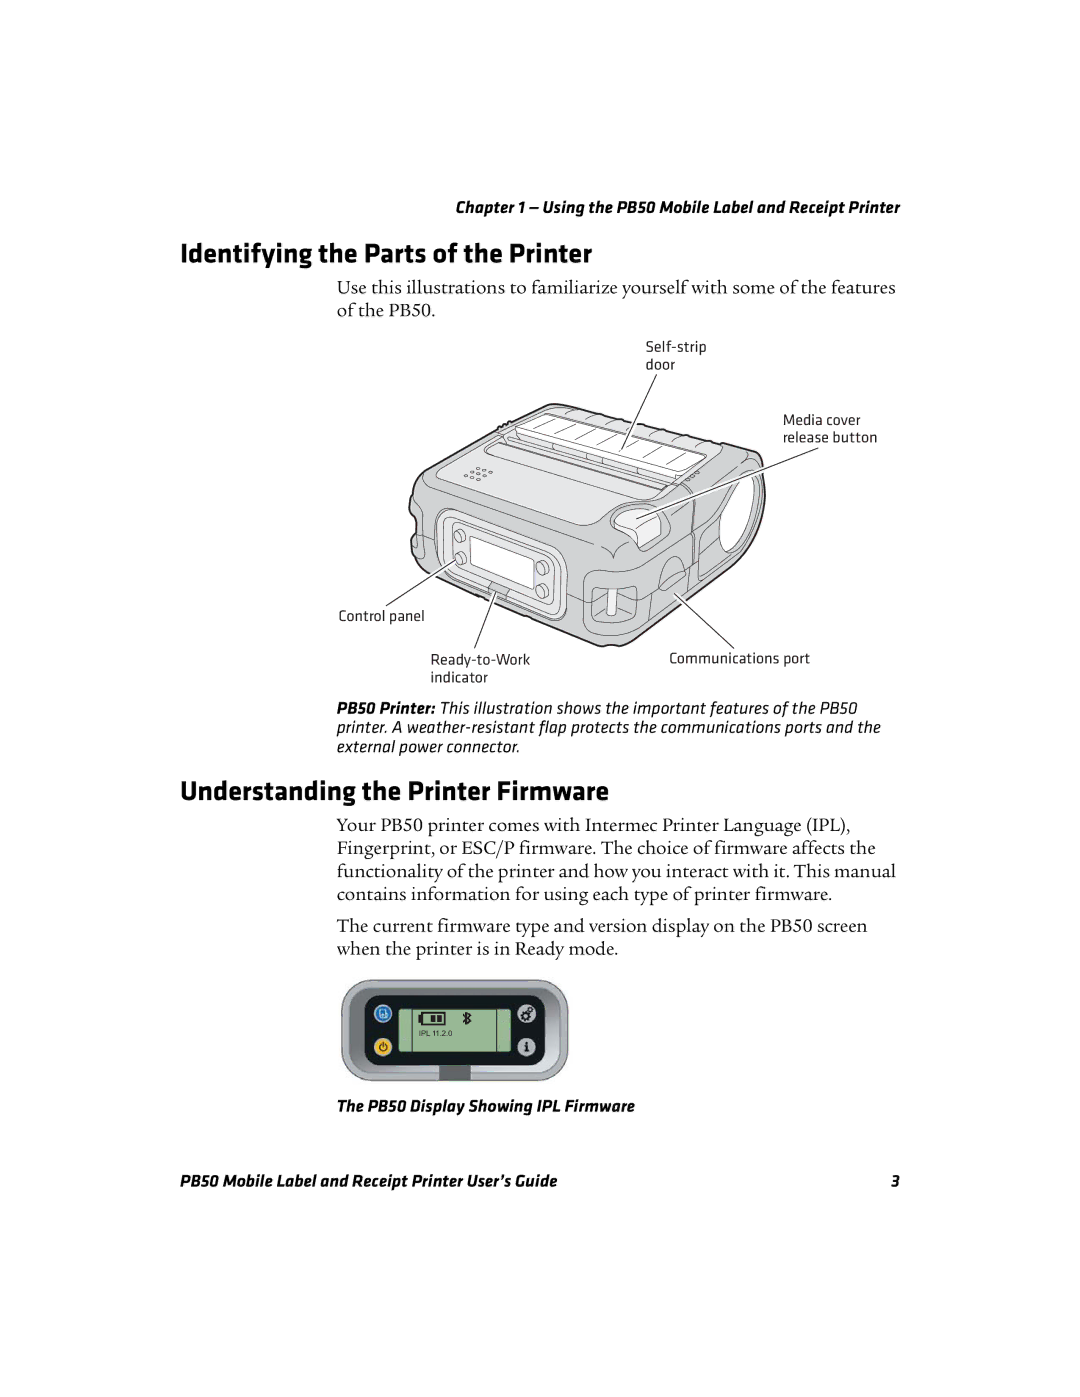 Intermec PB50 manual Identifying the Parts of the Printer, Understanding the Printer Firmware 